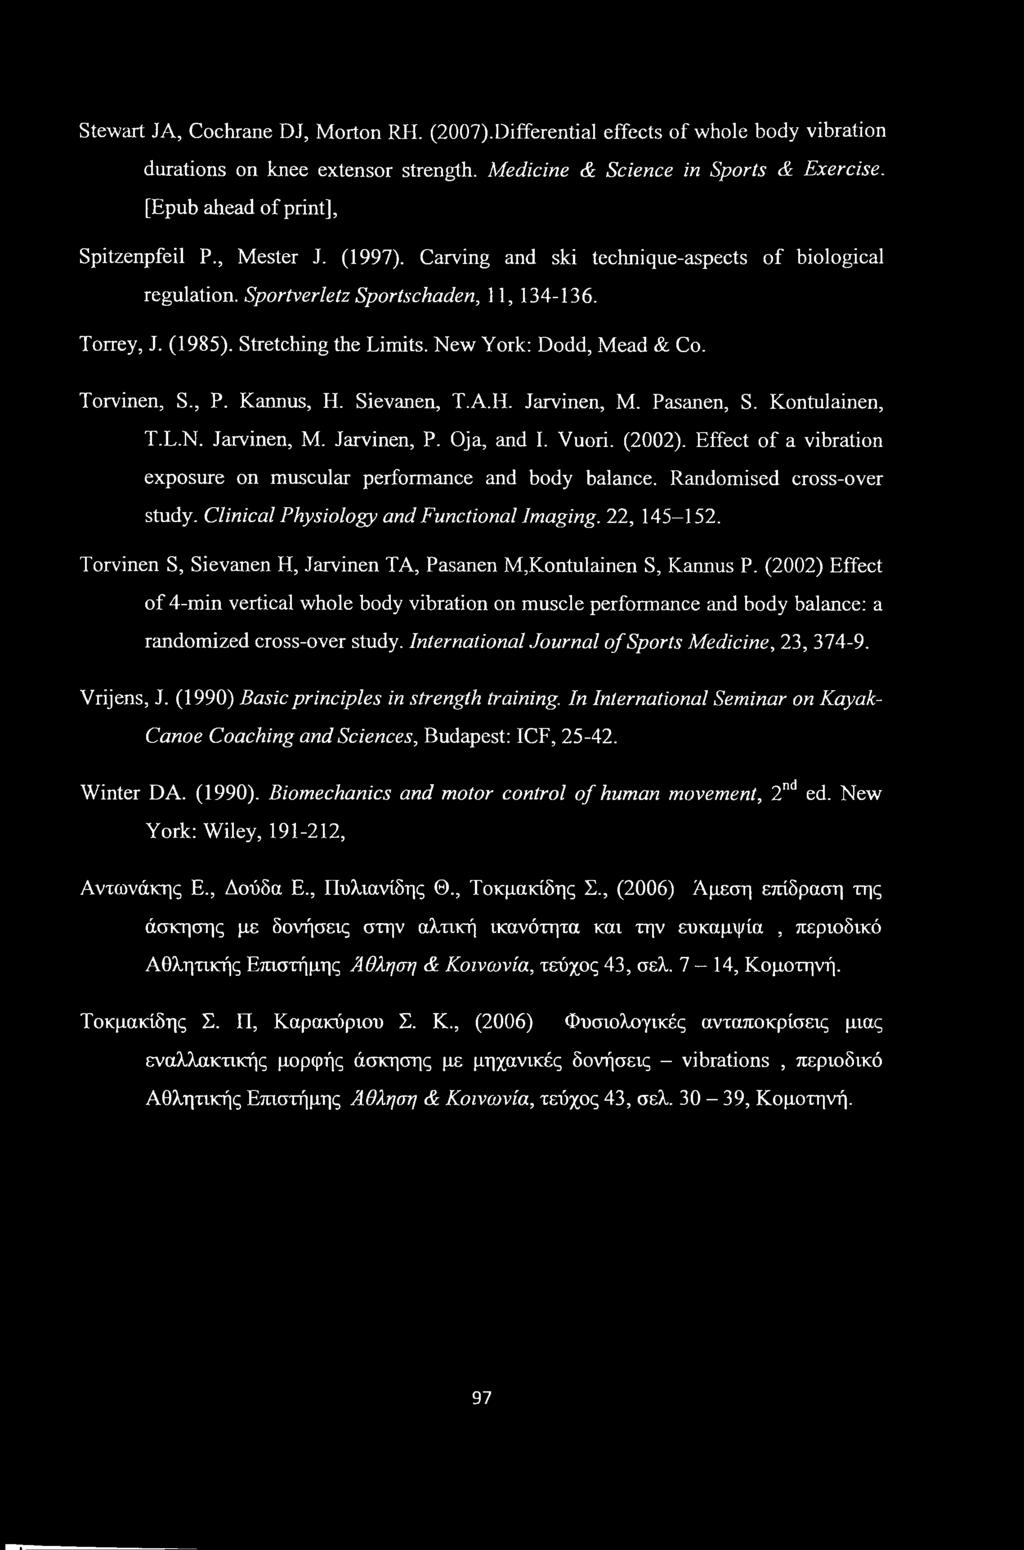 New York: Dodd, Mead & Co. Torvinen, S., P. Kannus, H. Sievanen, T.A.H. Jarvinen, M. Pasanen, S. Kontulainen, T.L.N. Jarvinen, M. Jarvinen, P. Oja, and I. Vuori. (2002).